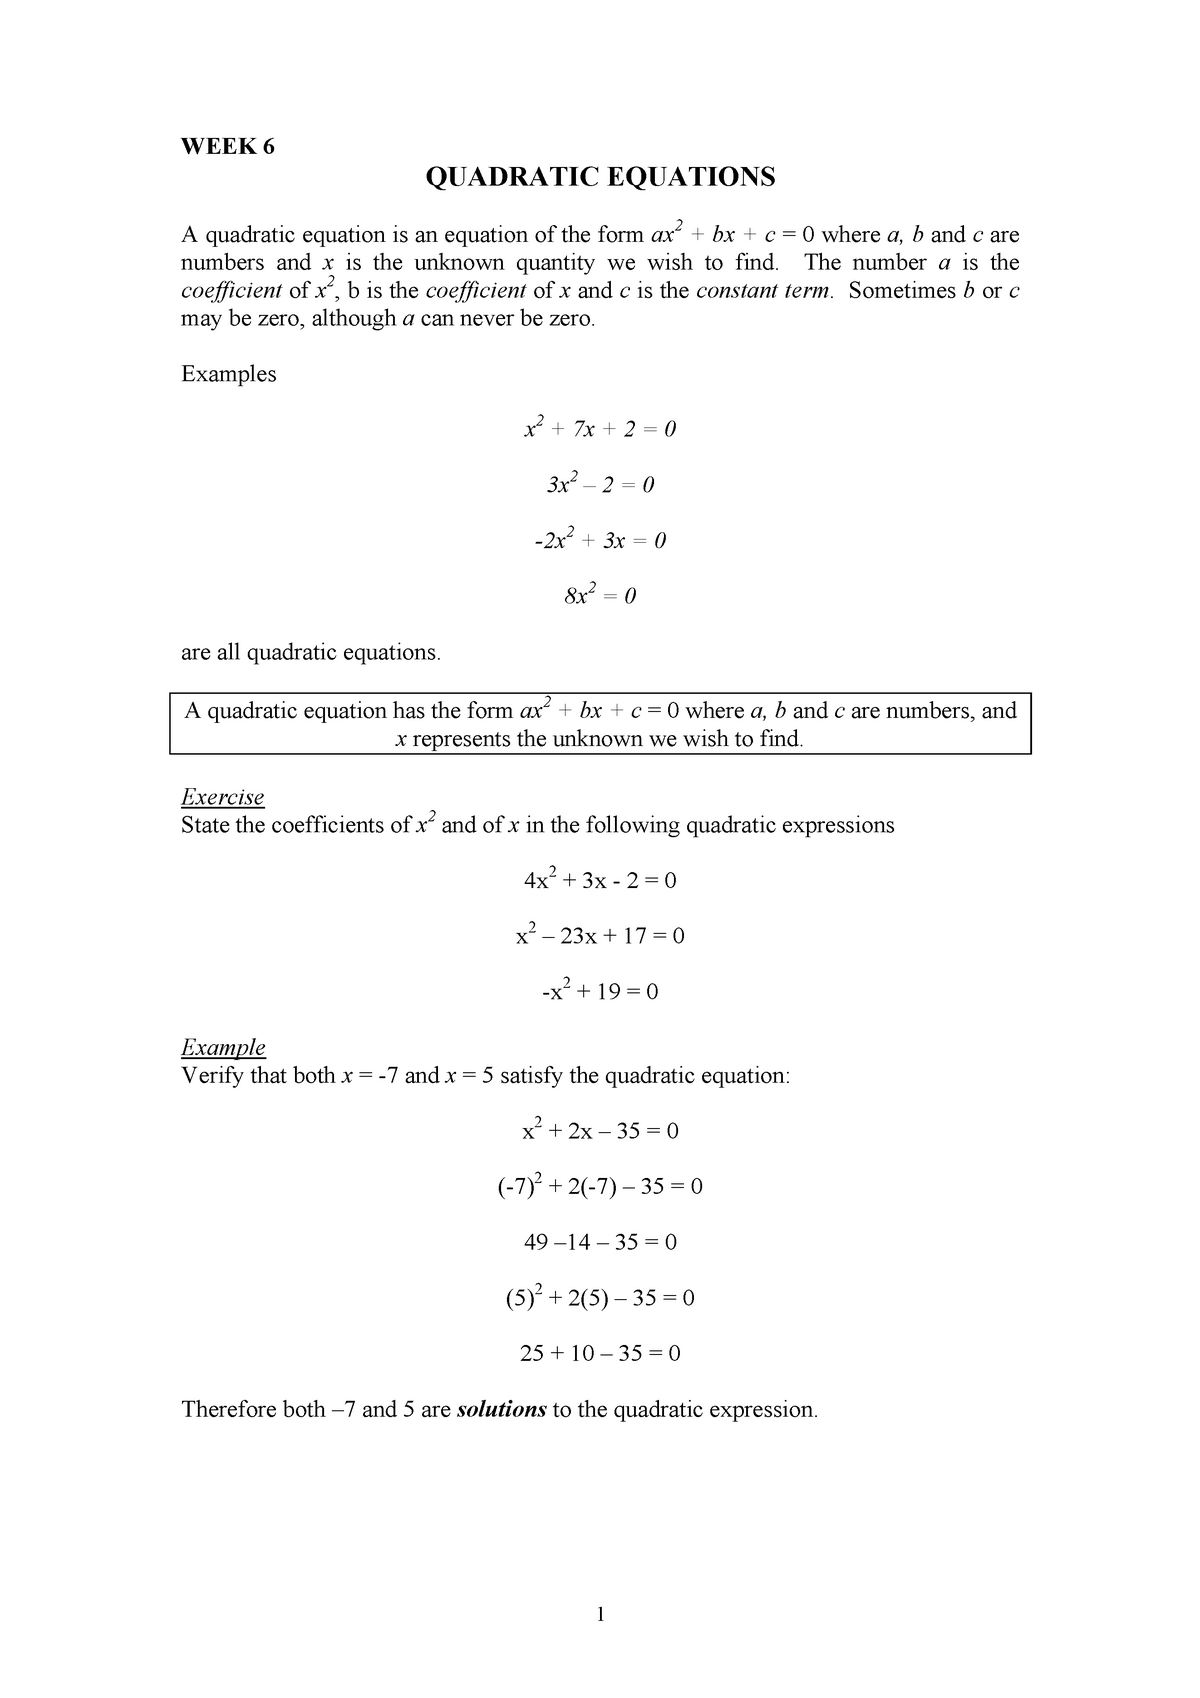 lecture-6-quadratic-equations-week-6-quadratic-equations-a-quadratic